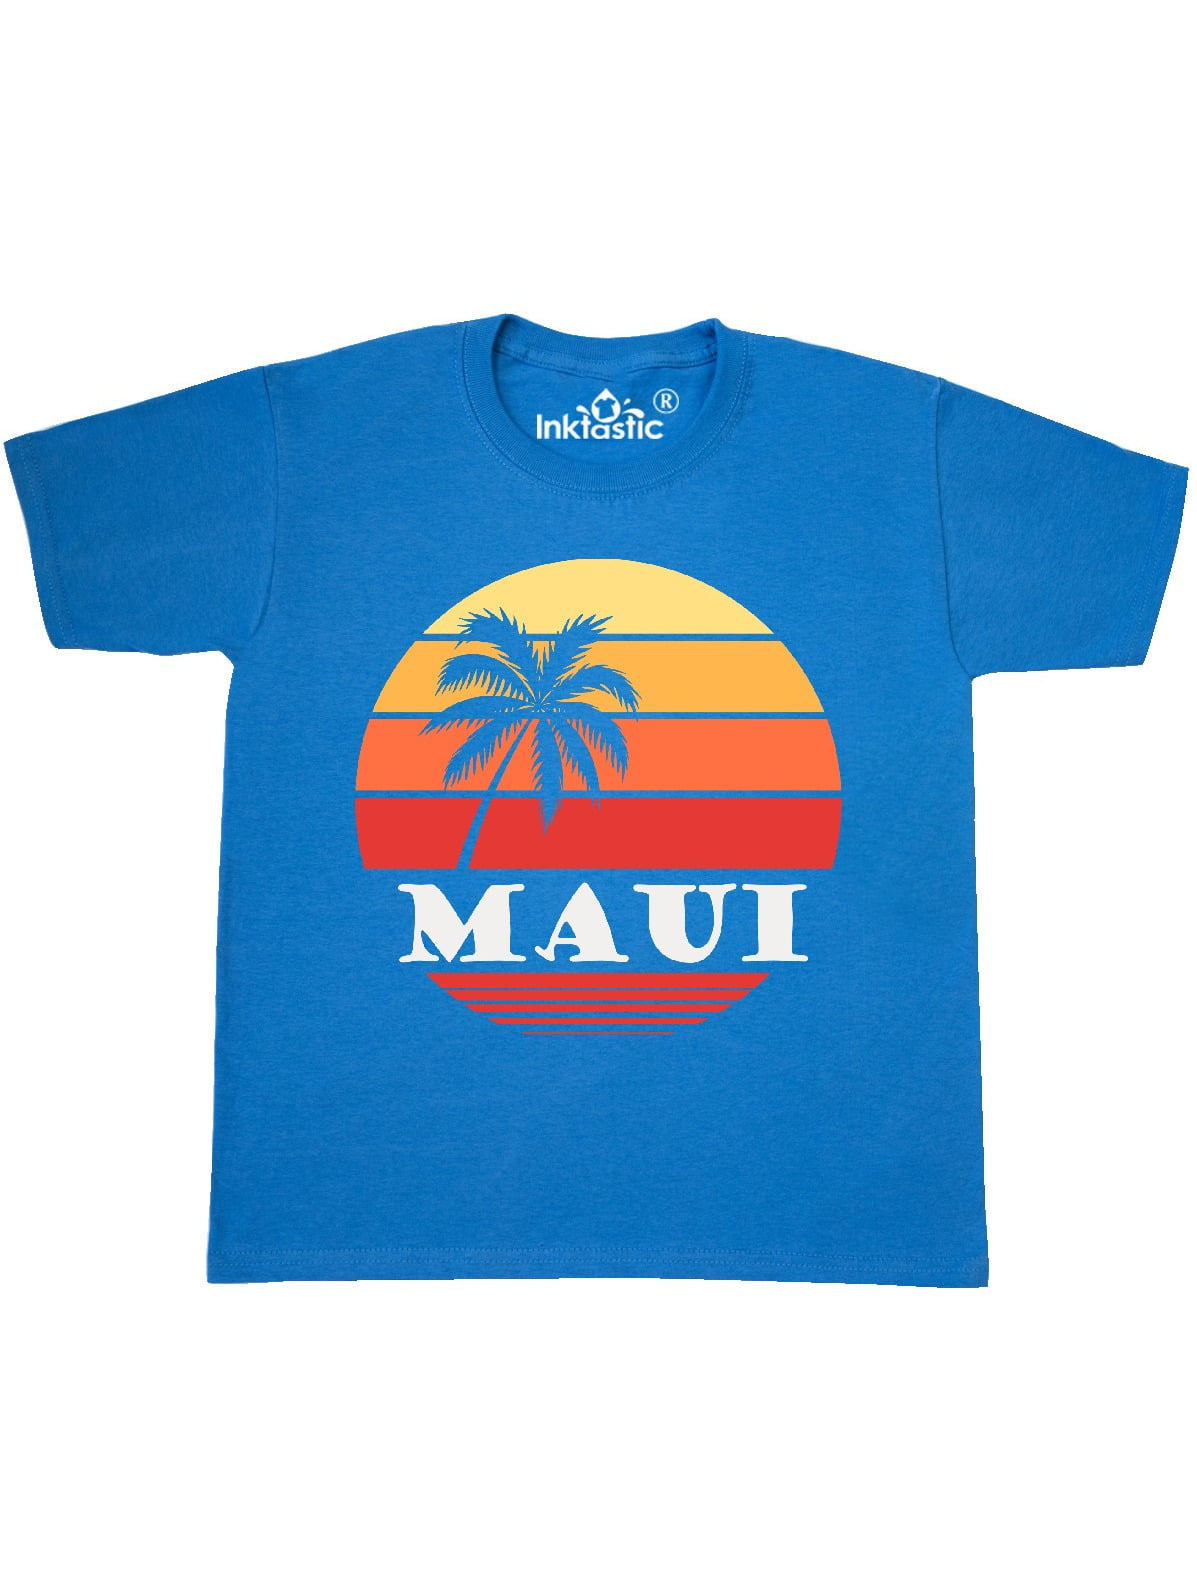 Maui Hawaii Vacation Youth T-Shirt - Walmart.com - Walmart.com